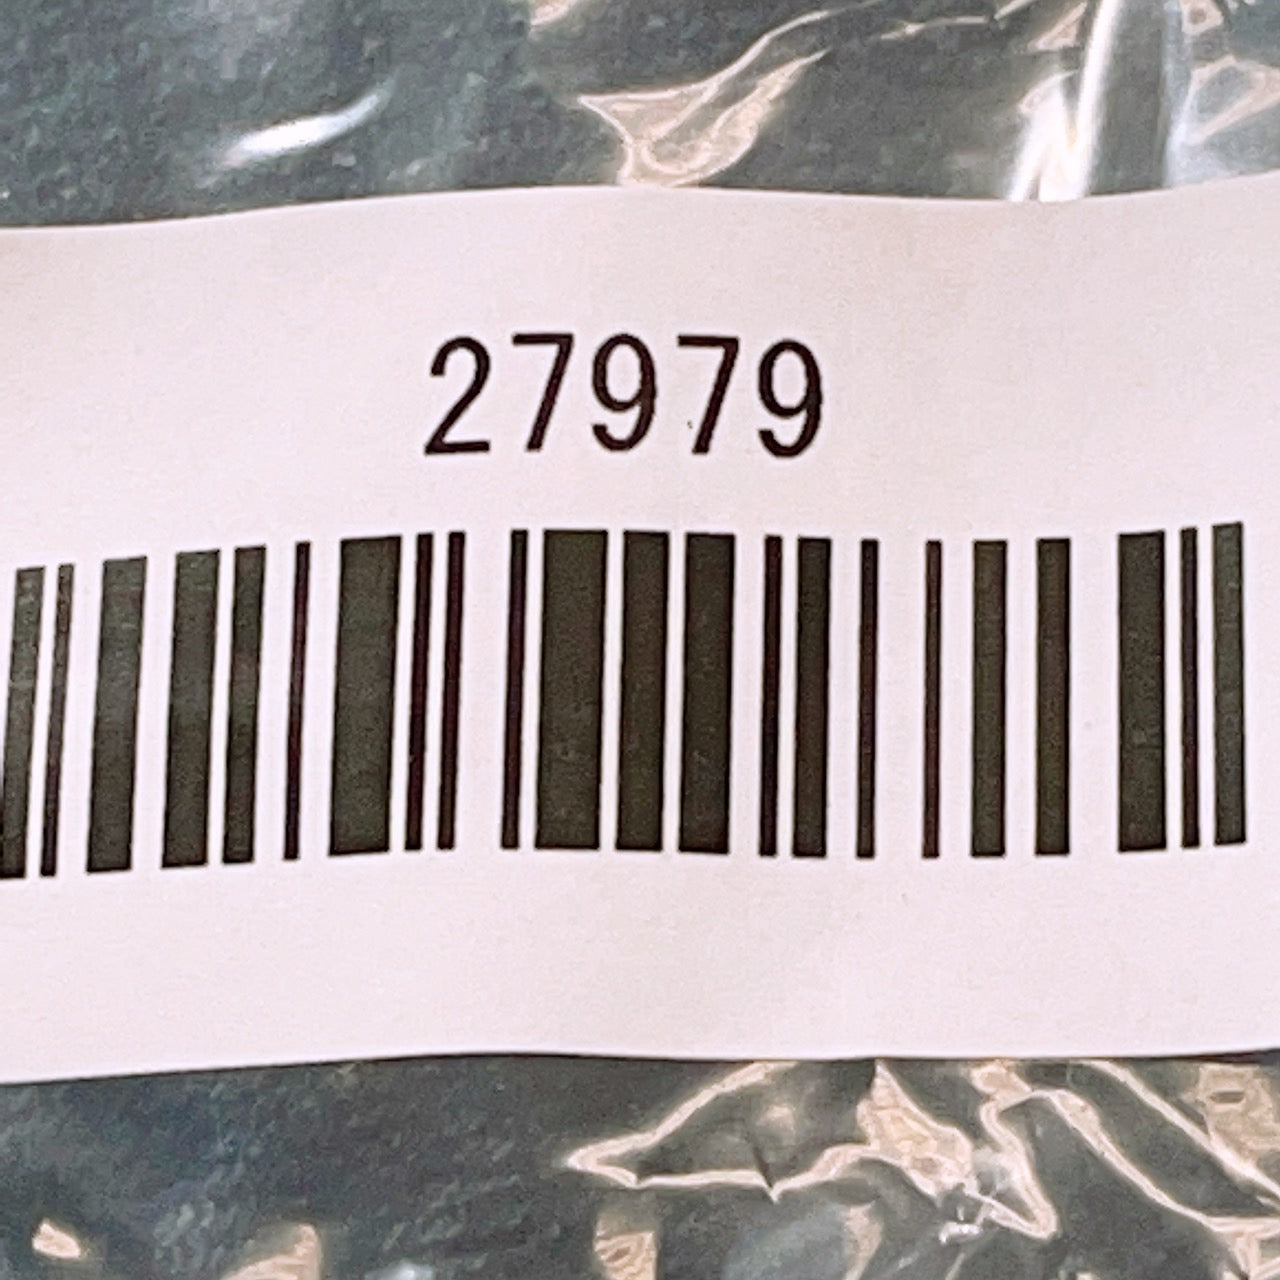 【27979】 BREEZE ブリーズ ショートパンツ サイズ130 ブルー デニムパンツ カジュアルパンツ レース ウエストゴム 飾りボタン キッズ